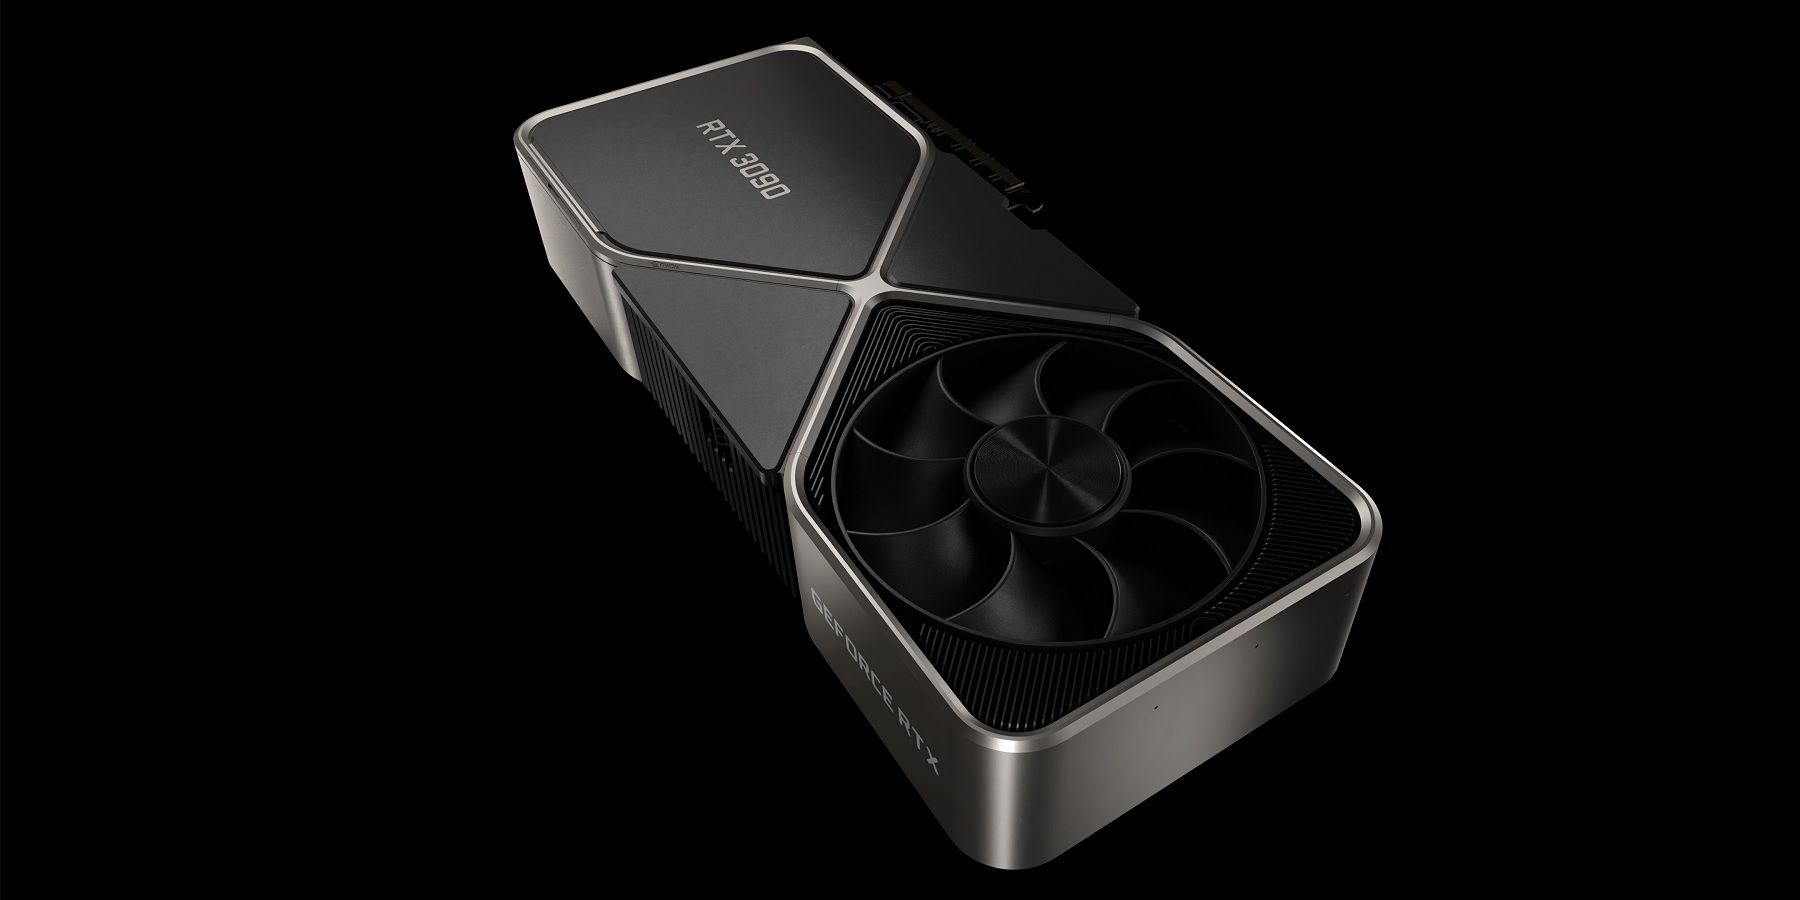 Nvidia’s New GeForce RTX 3090 GPU Supports 8K Gaming At 60 FPS